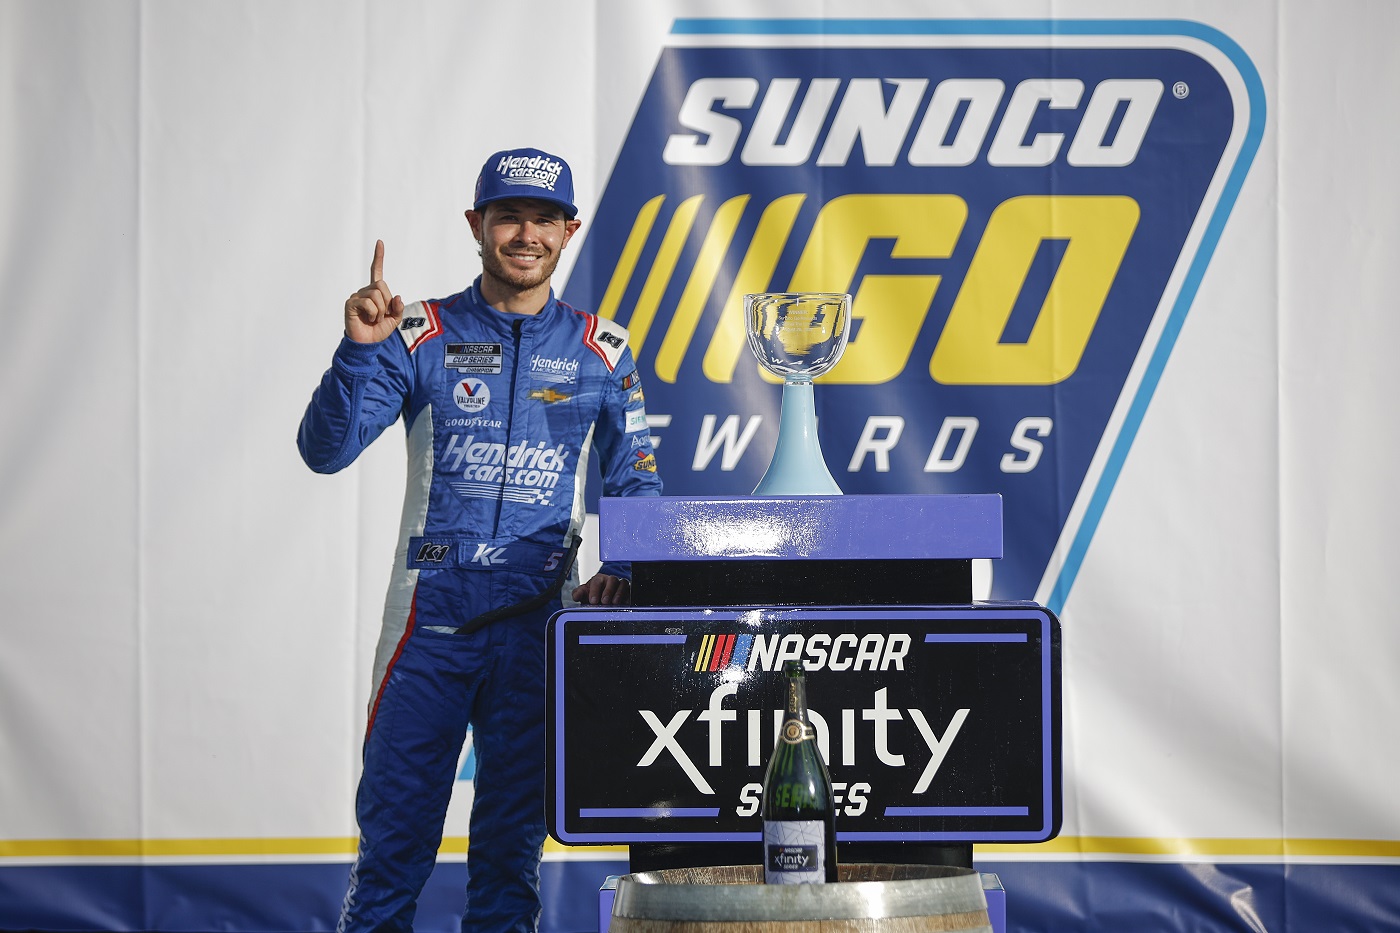 NASCAR Xfinity Series Sunoco Go Rewards 200 at The Glen